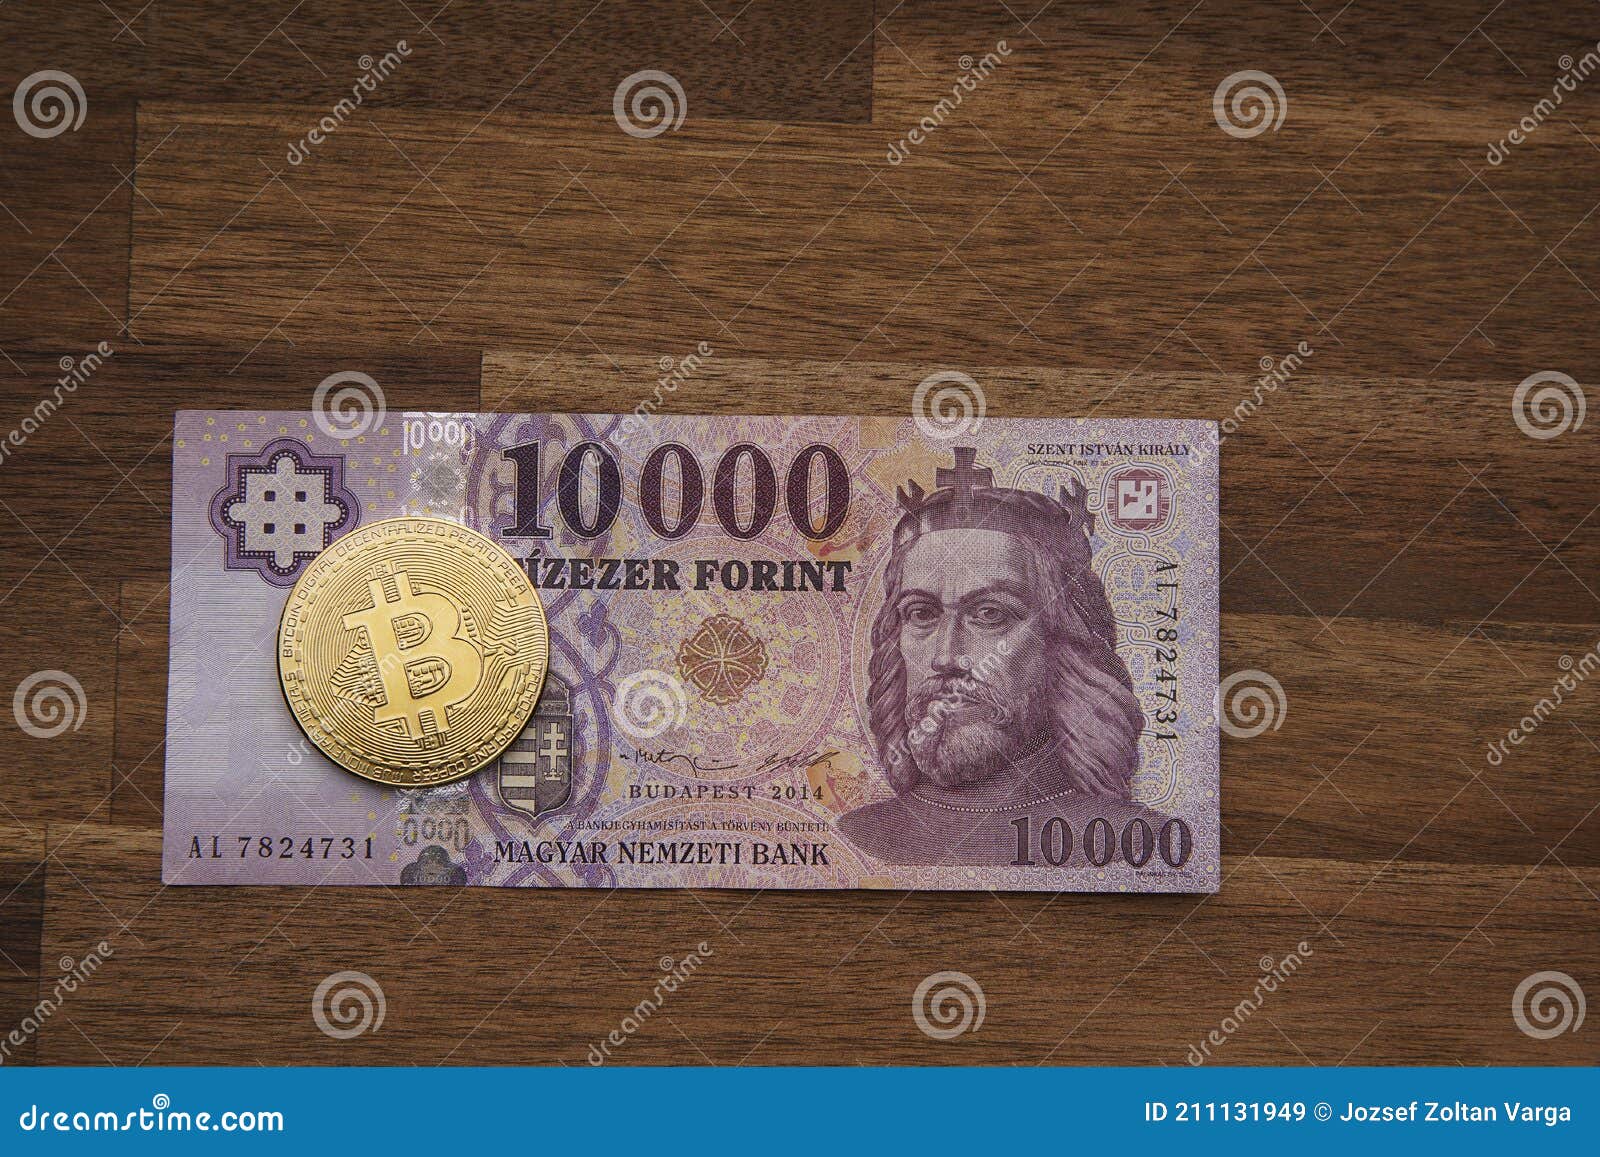 Convert 10, Bitcoin Cash to HUF | Bitcoin Cash price in Hungarian Forints | Revolut Australia